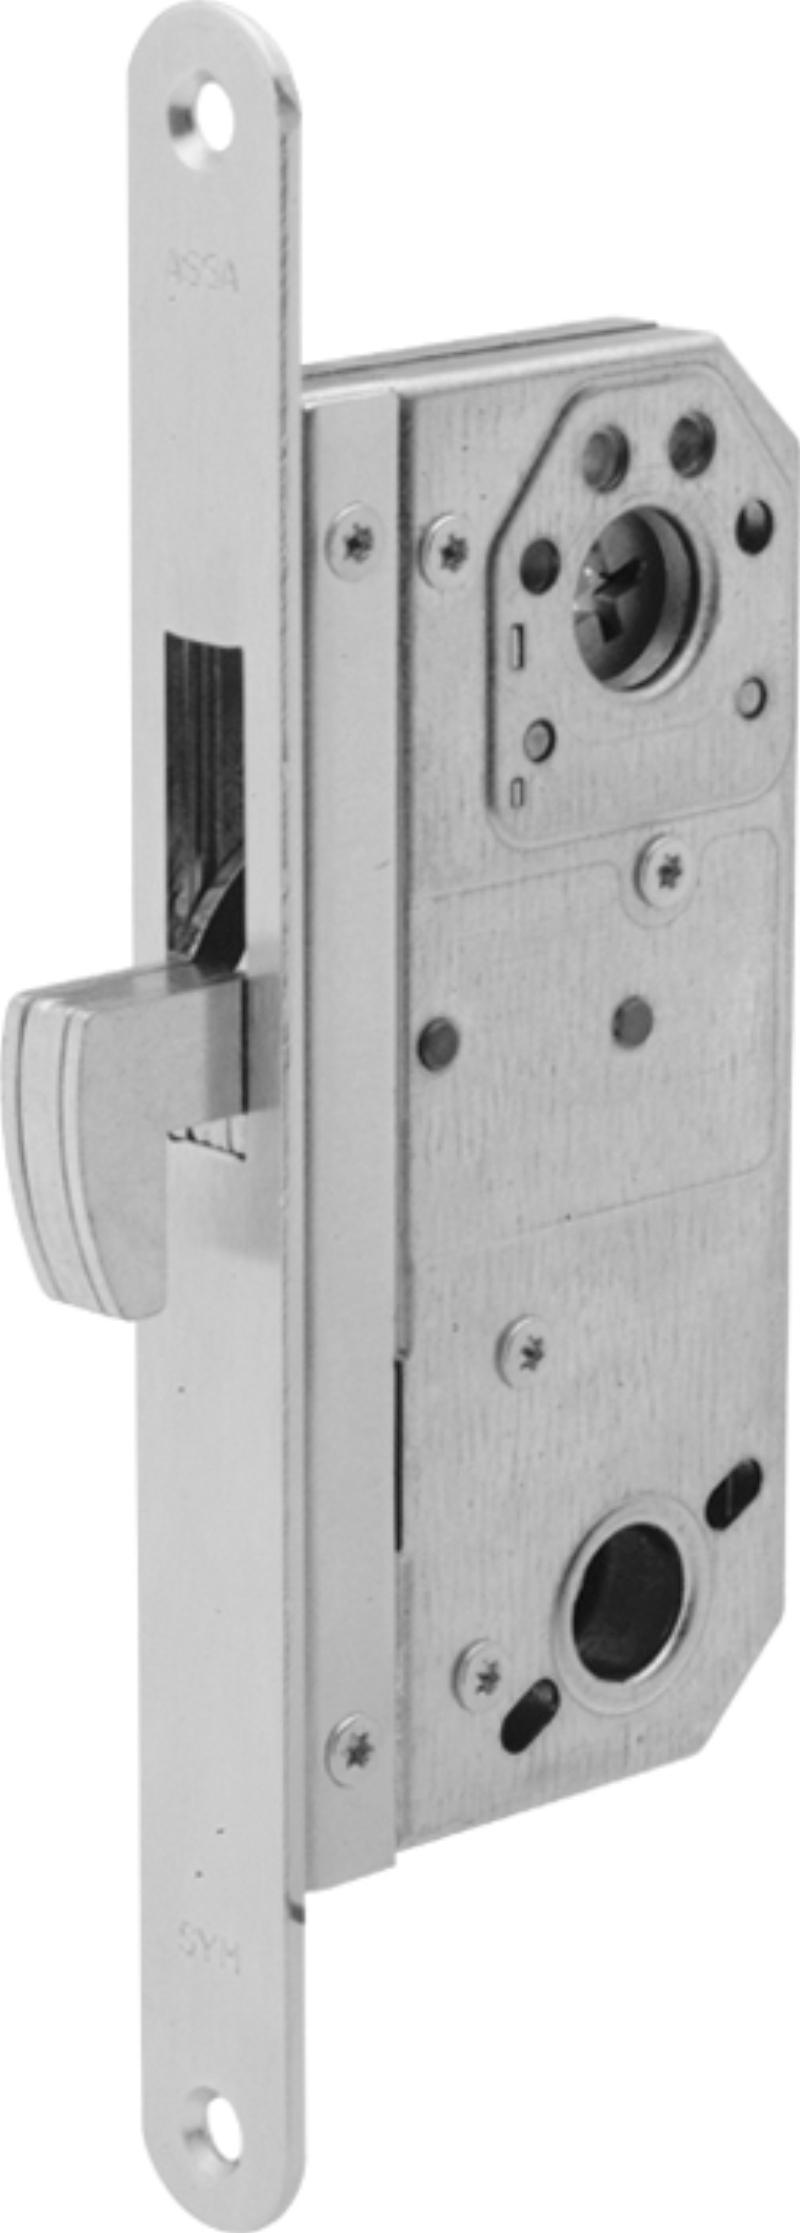 Assa lock box 9787 w/tin, w. micro-switch (521119)